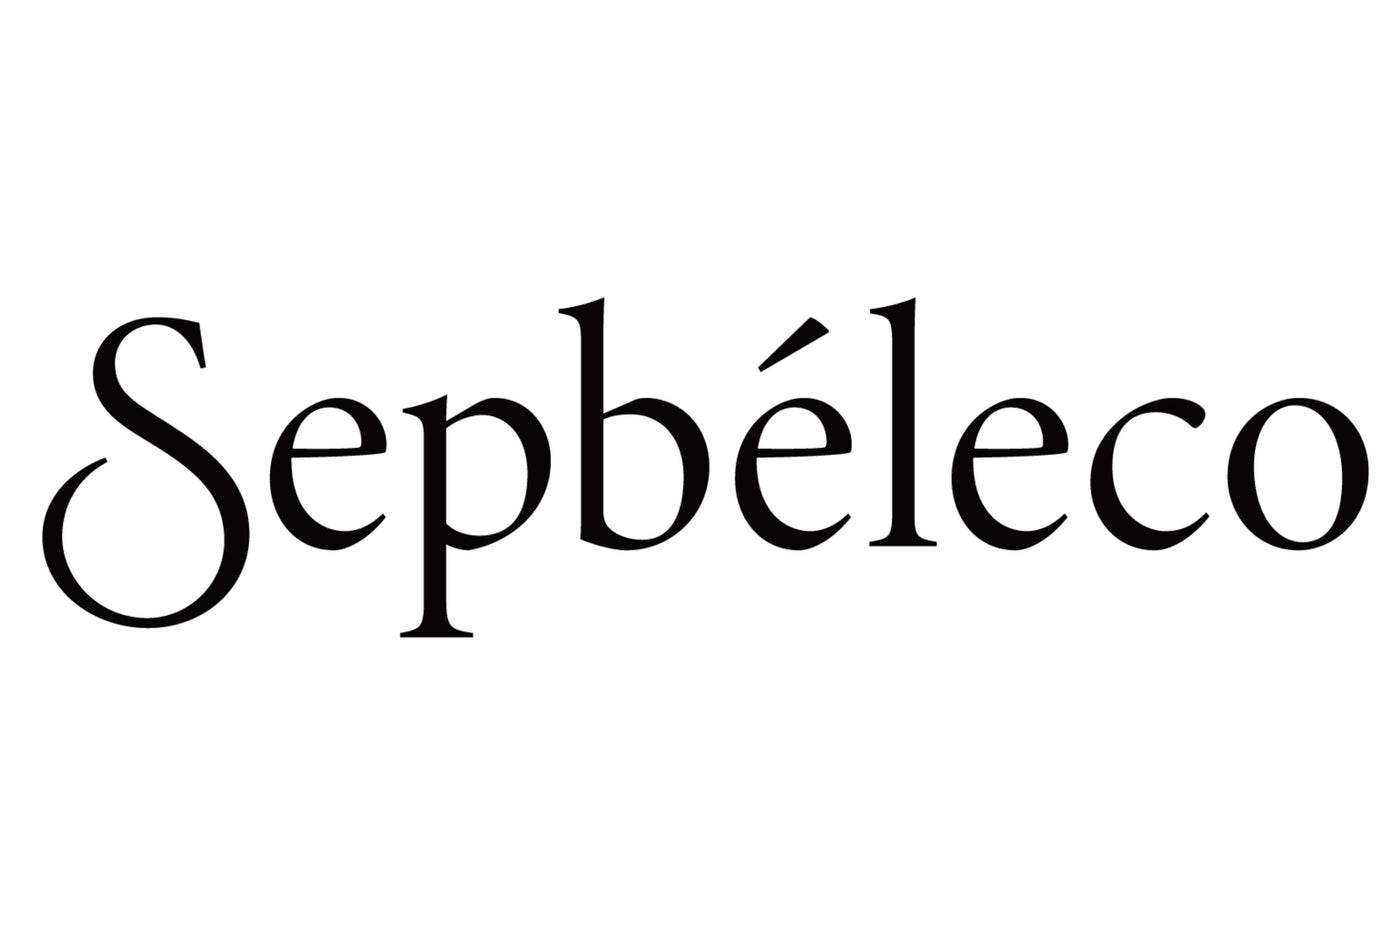 Sepbèleco